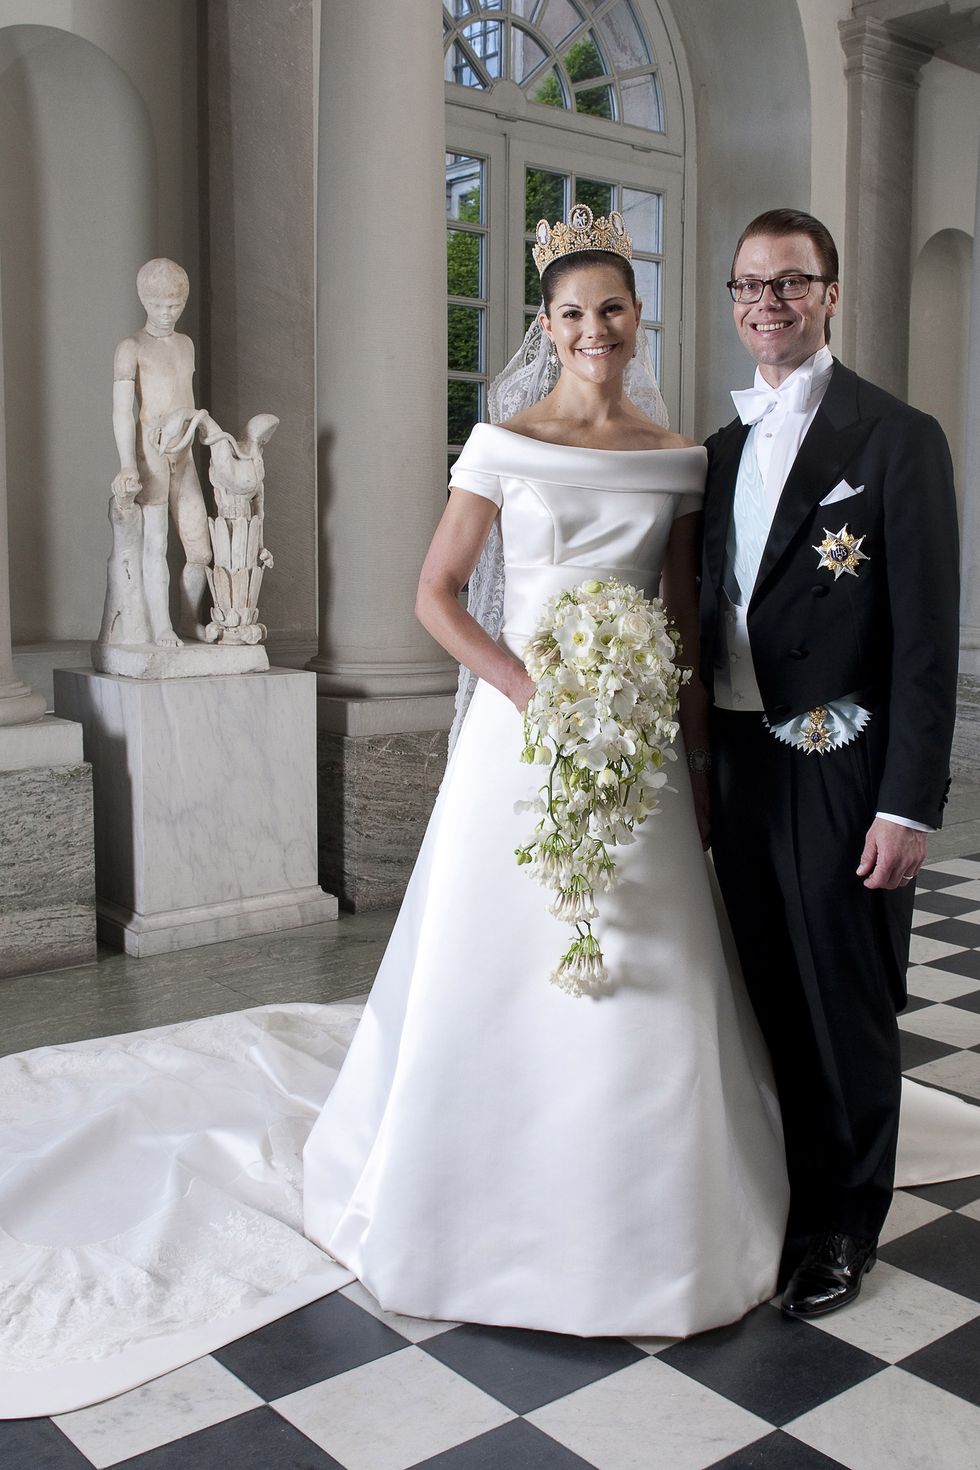 Princess Victoria & Prince Daniel of Sweden